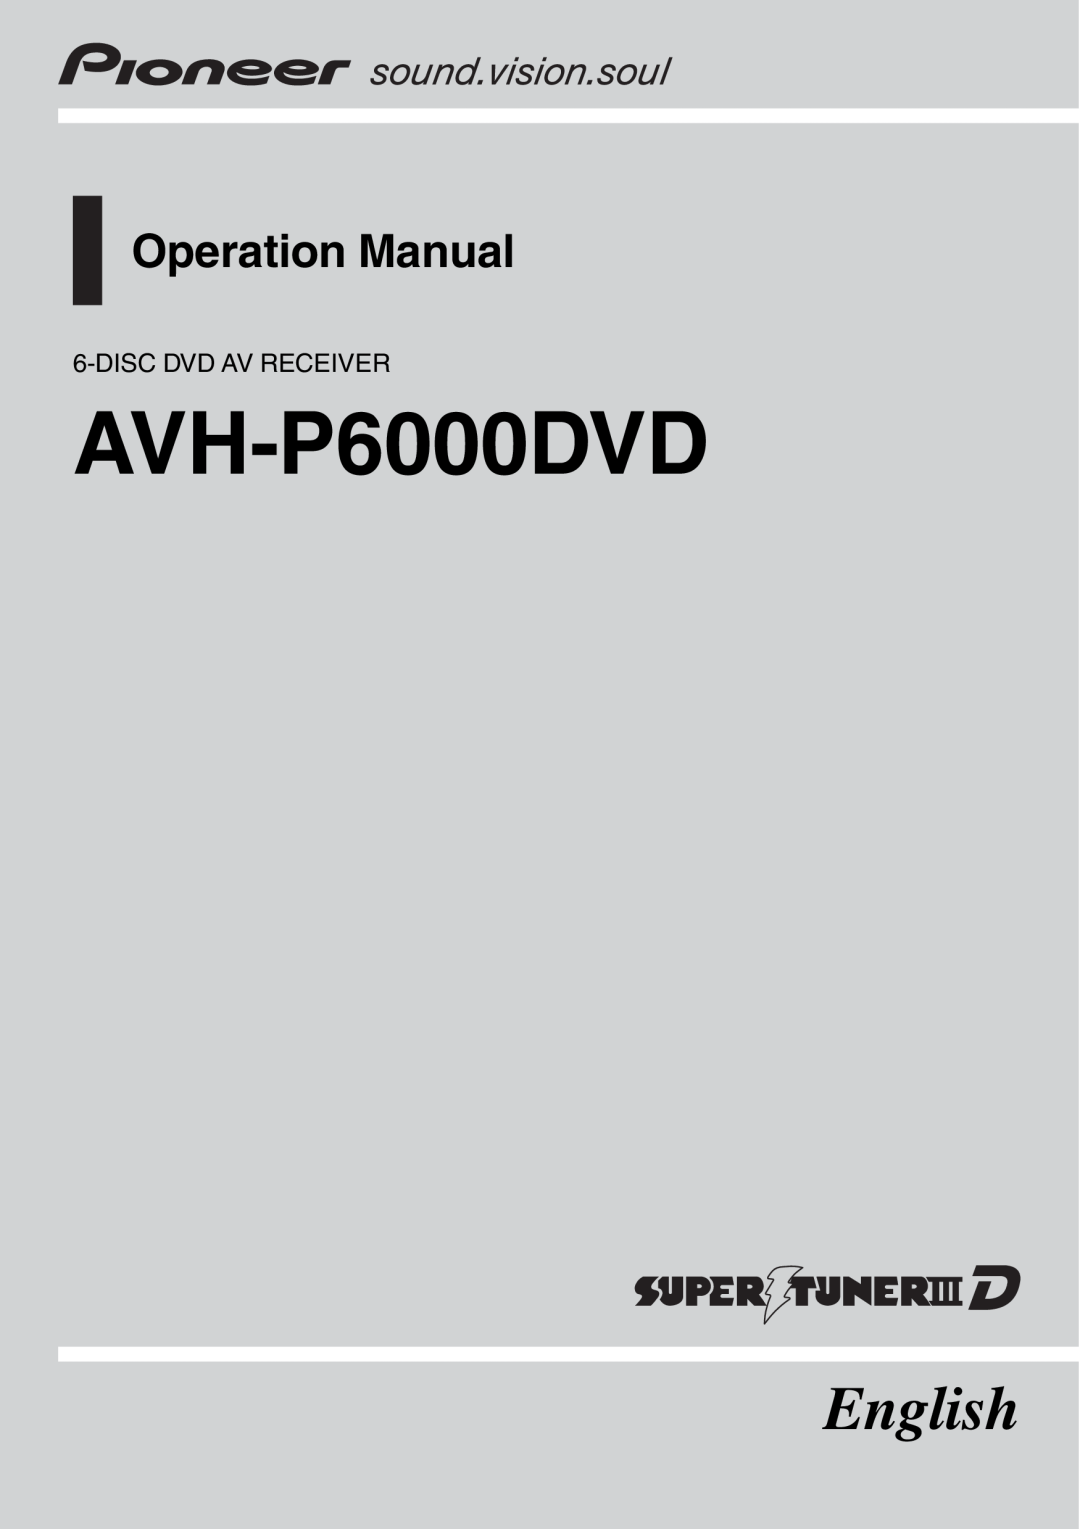 Pioneer AVH-P6000DVD operation manual English, Operation Manual 